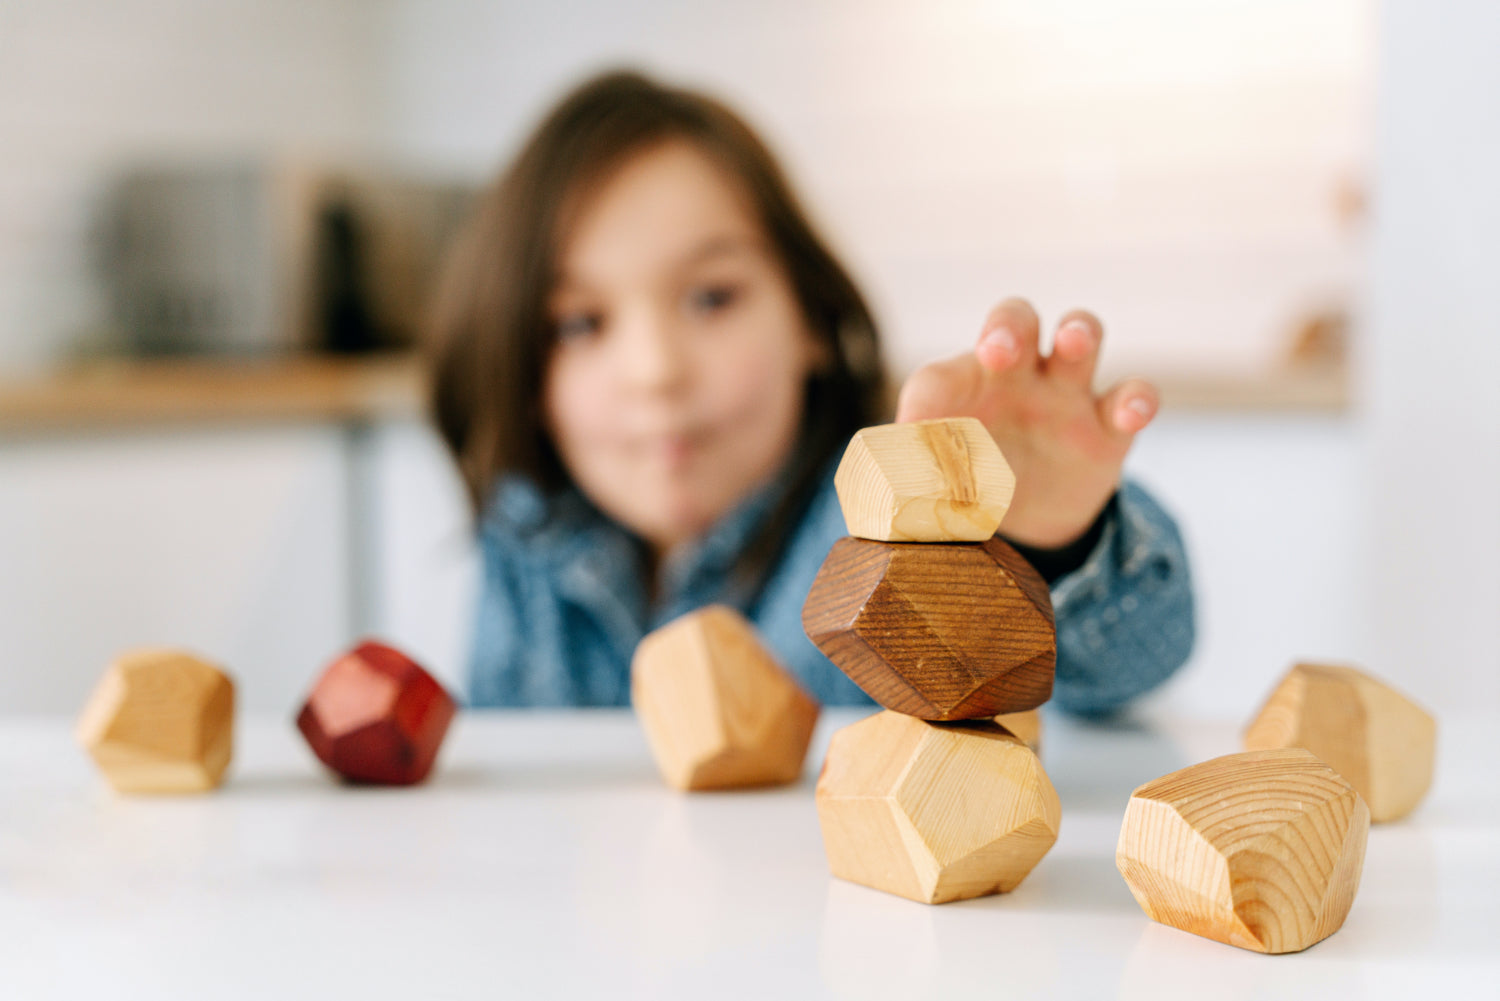 A child stacks wooden blocks